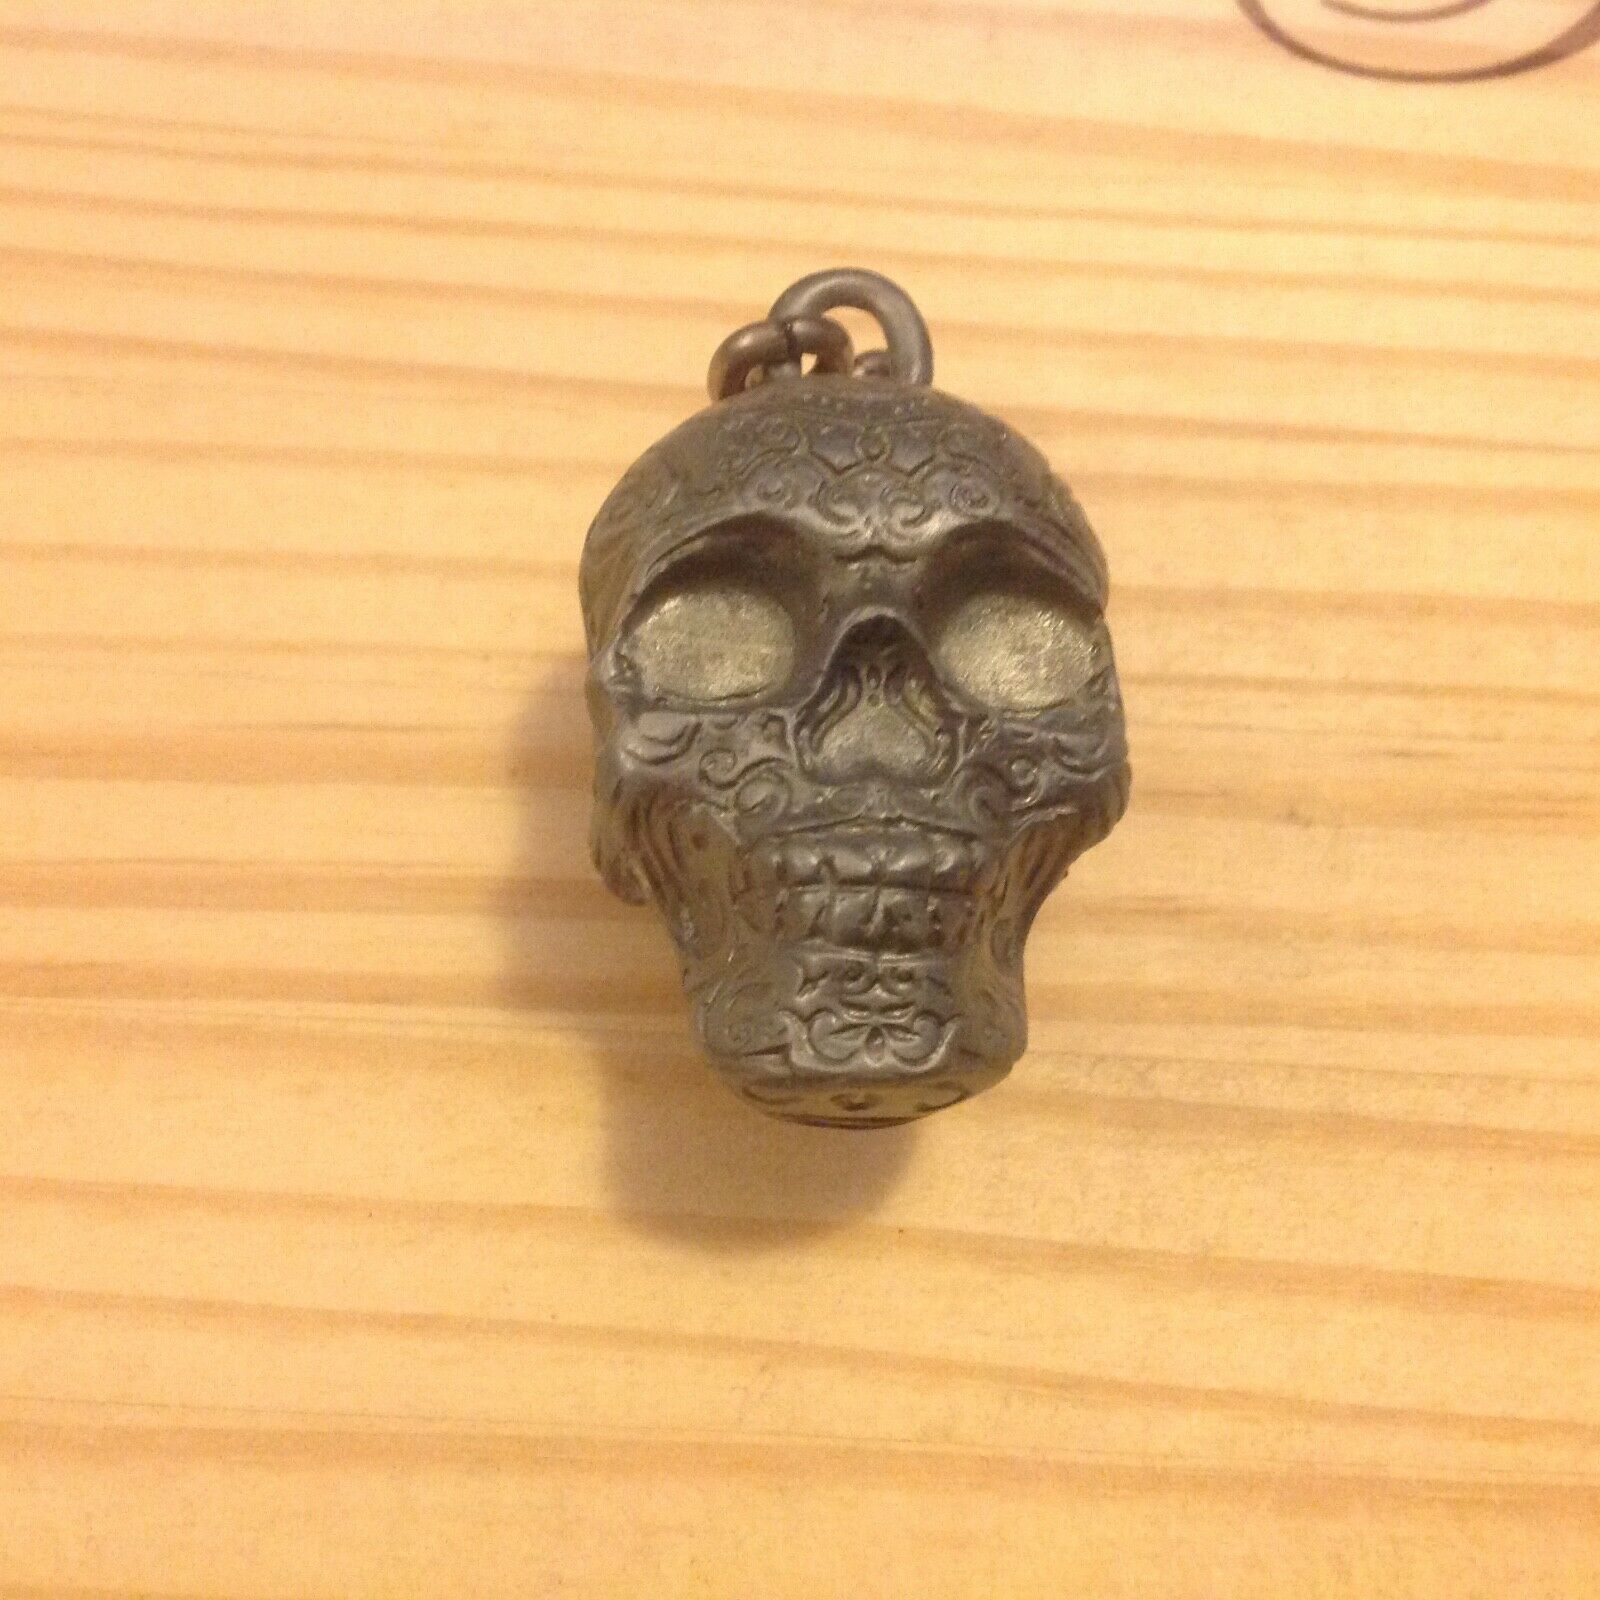 Jose Cuervo Tequila Metal Skull Keychain Bottle Opener